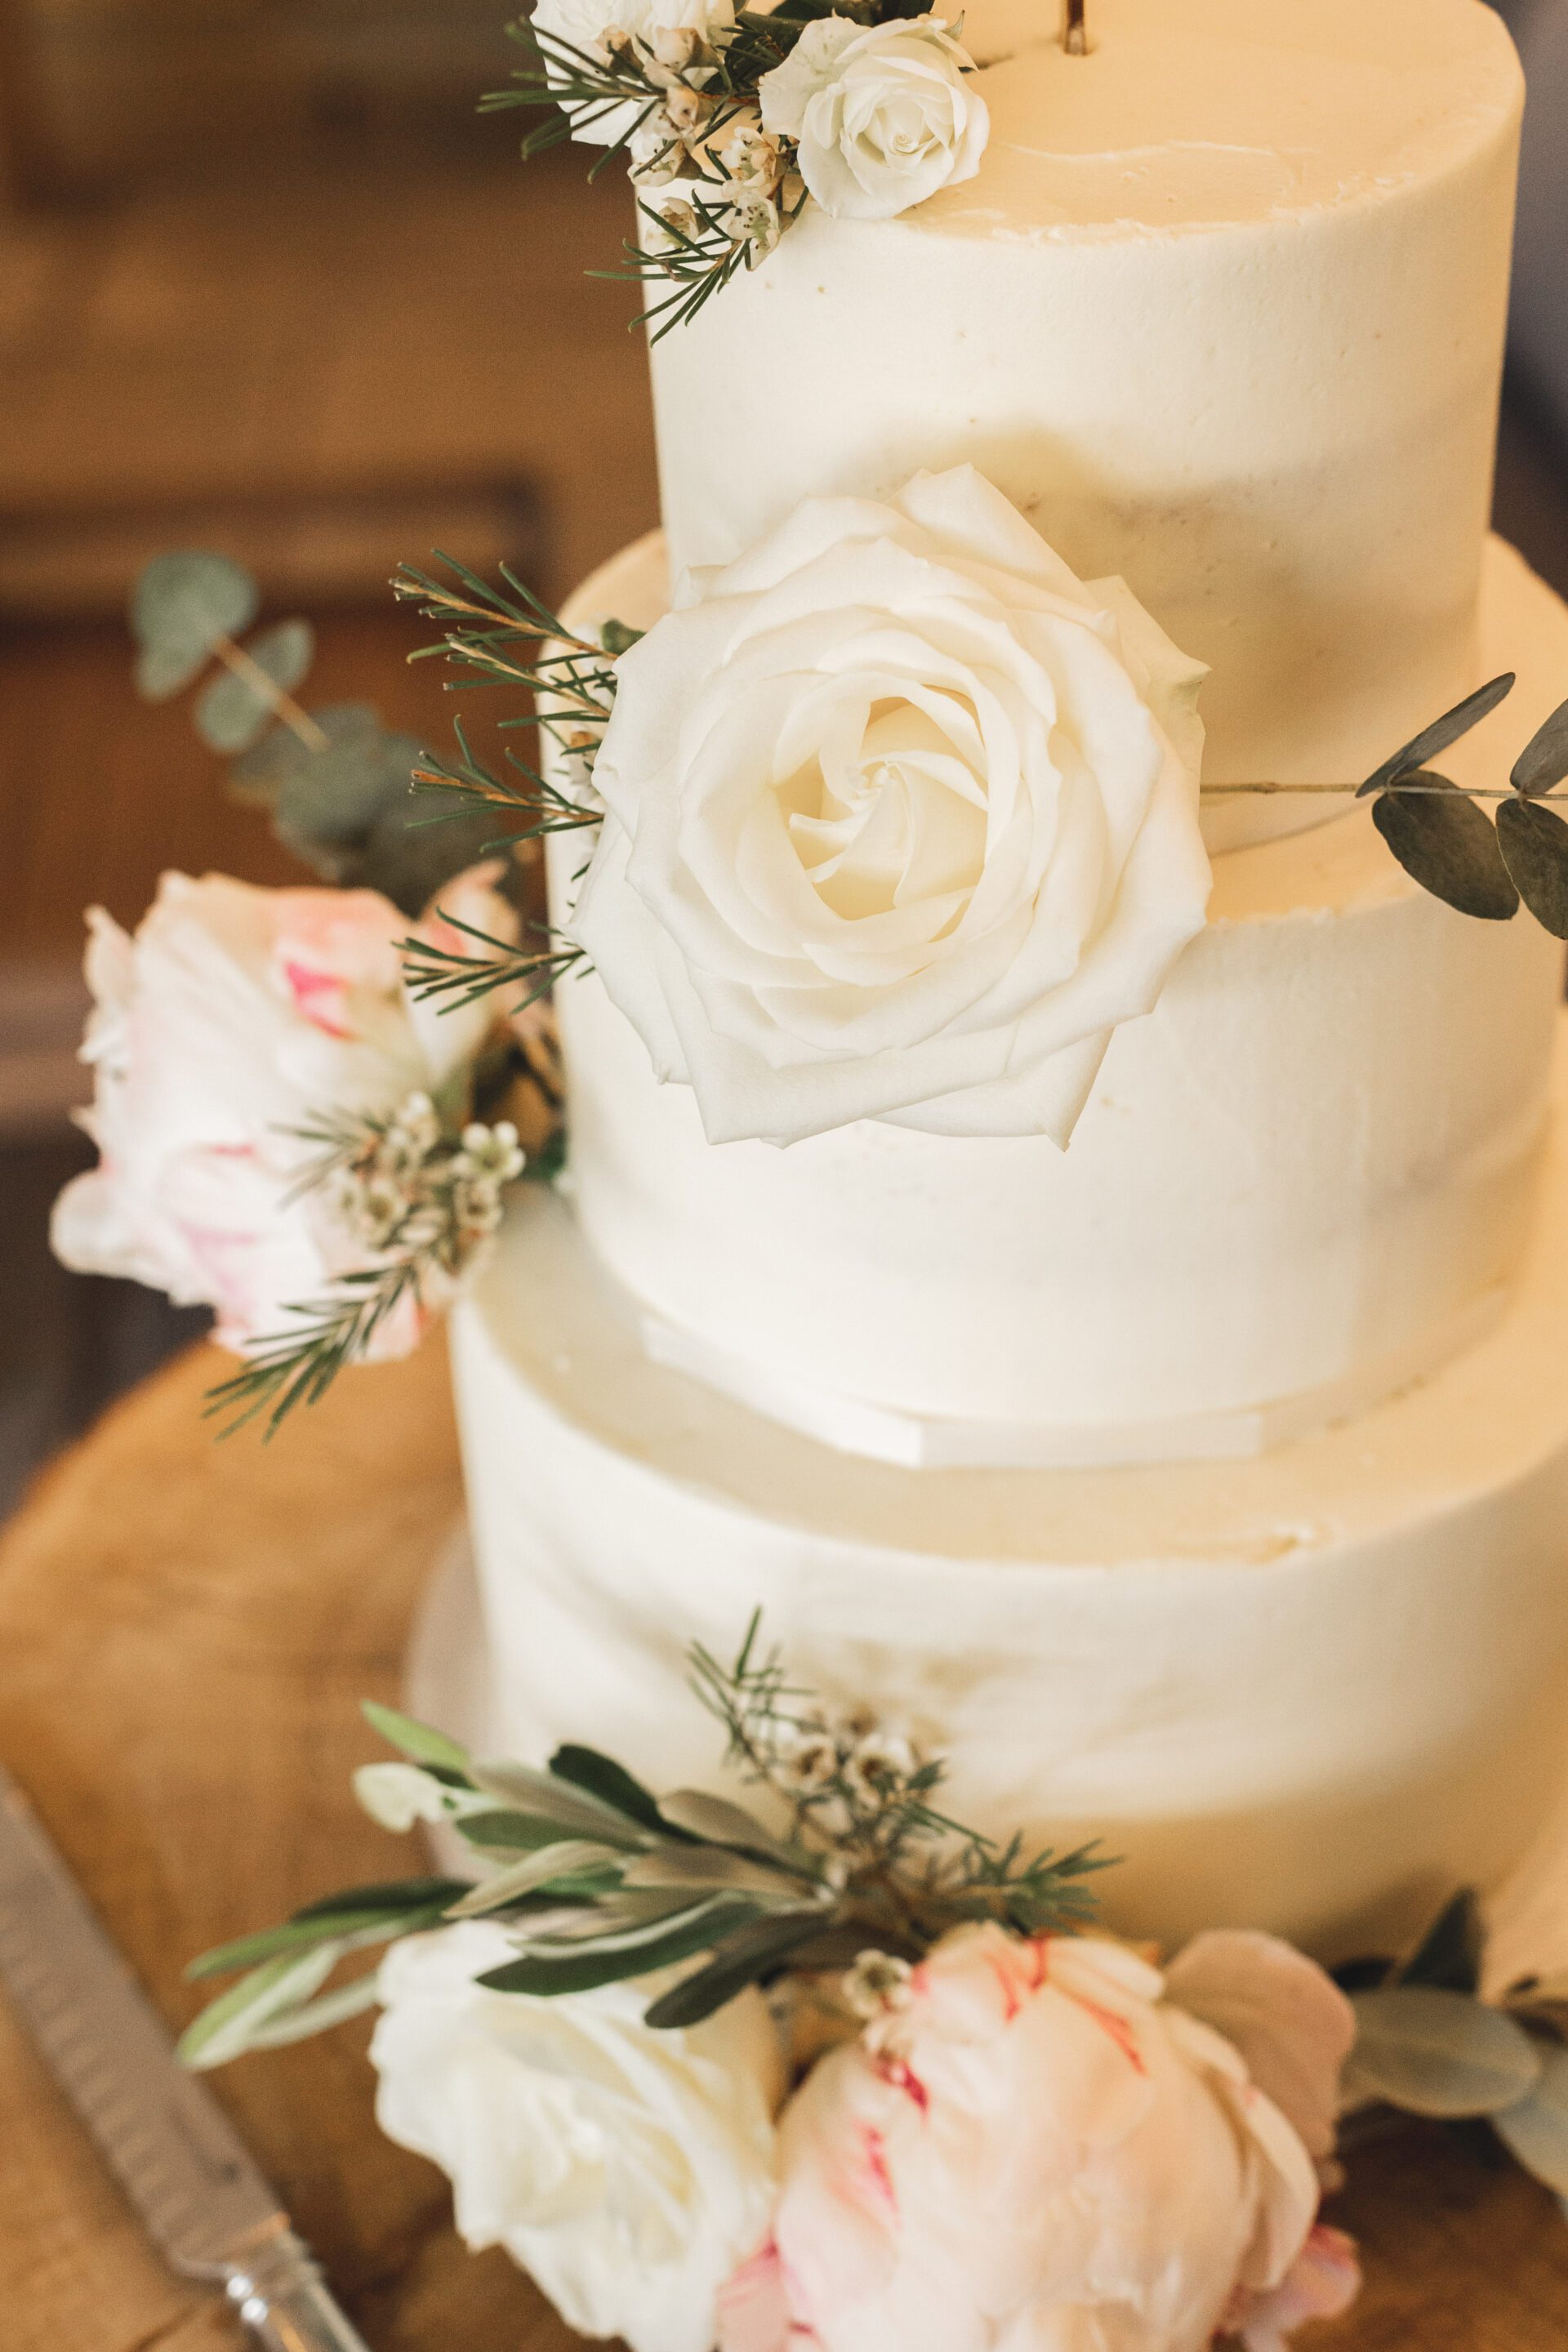 A classic simple wedding cake